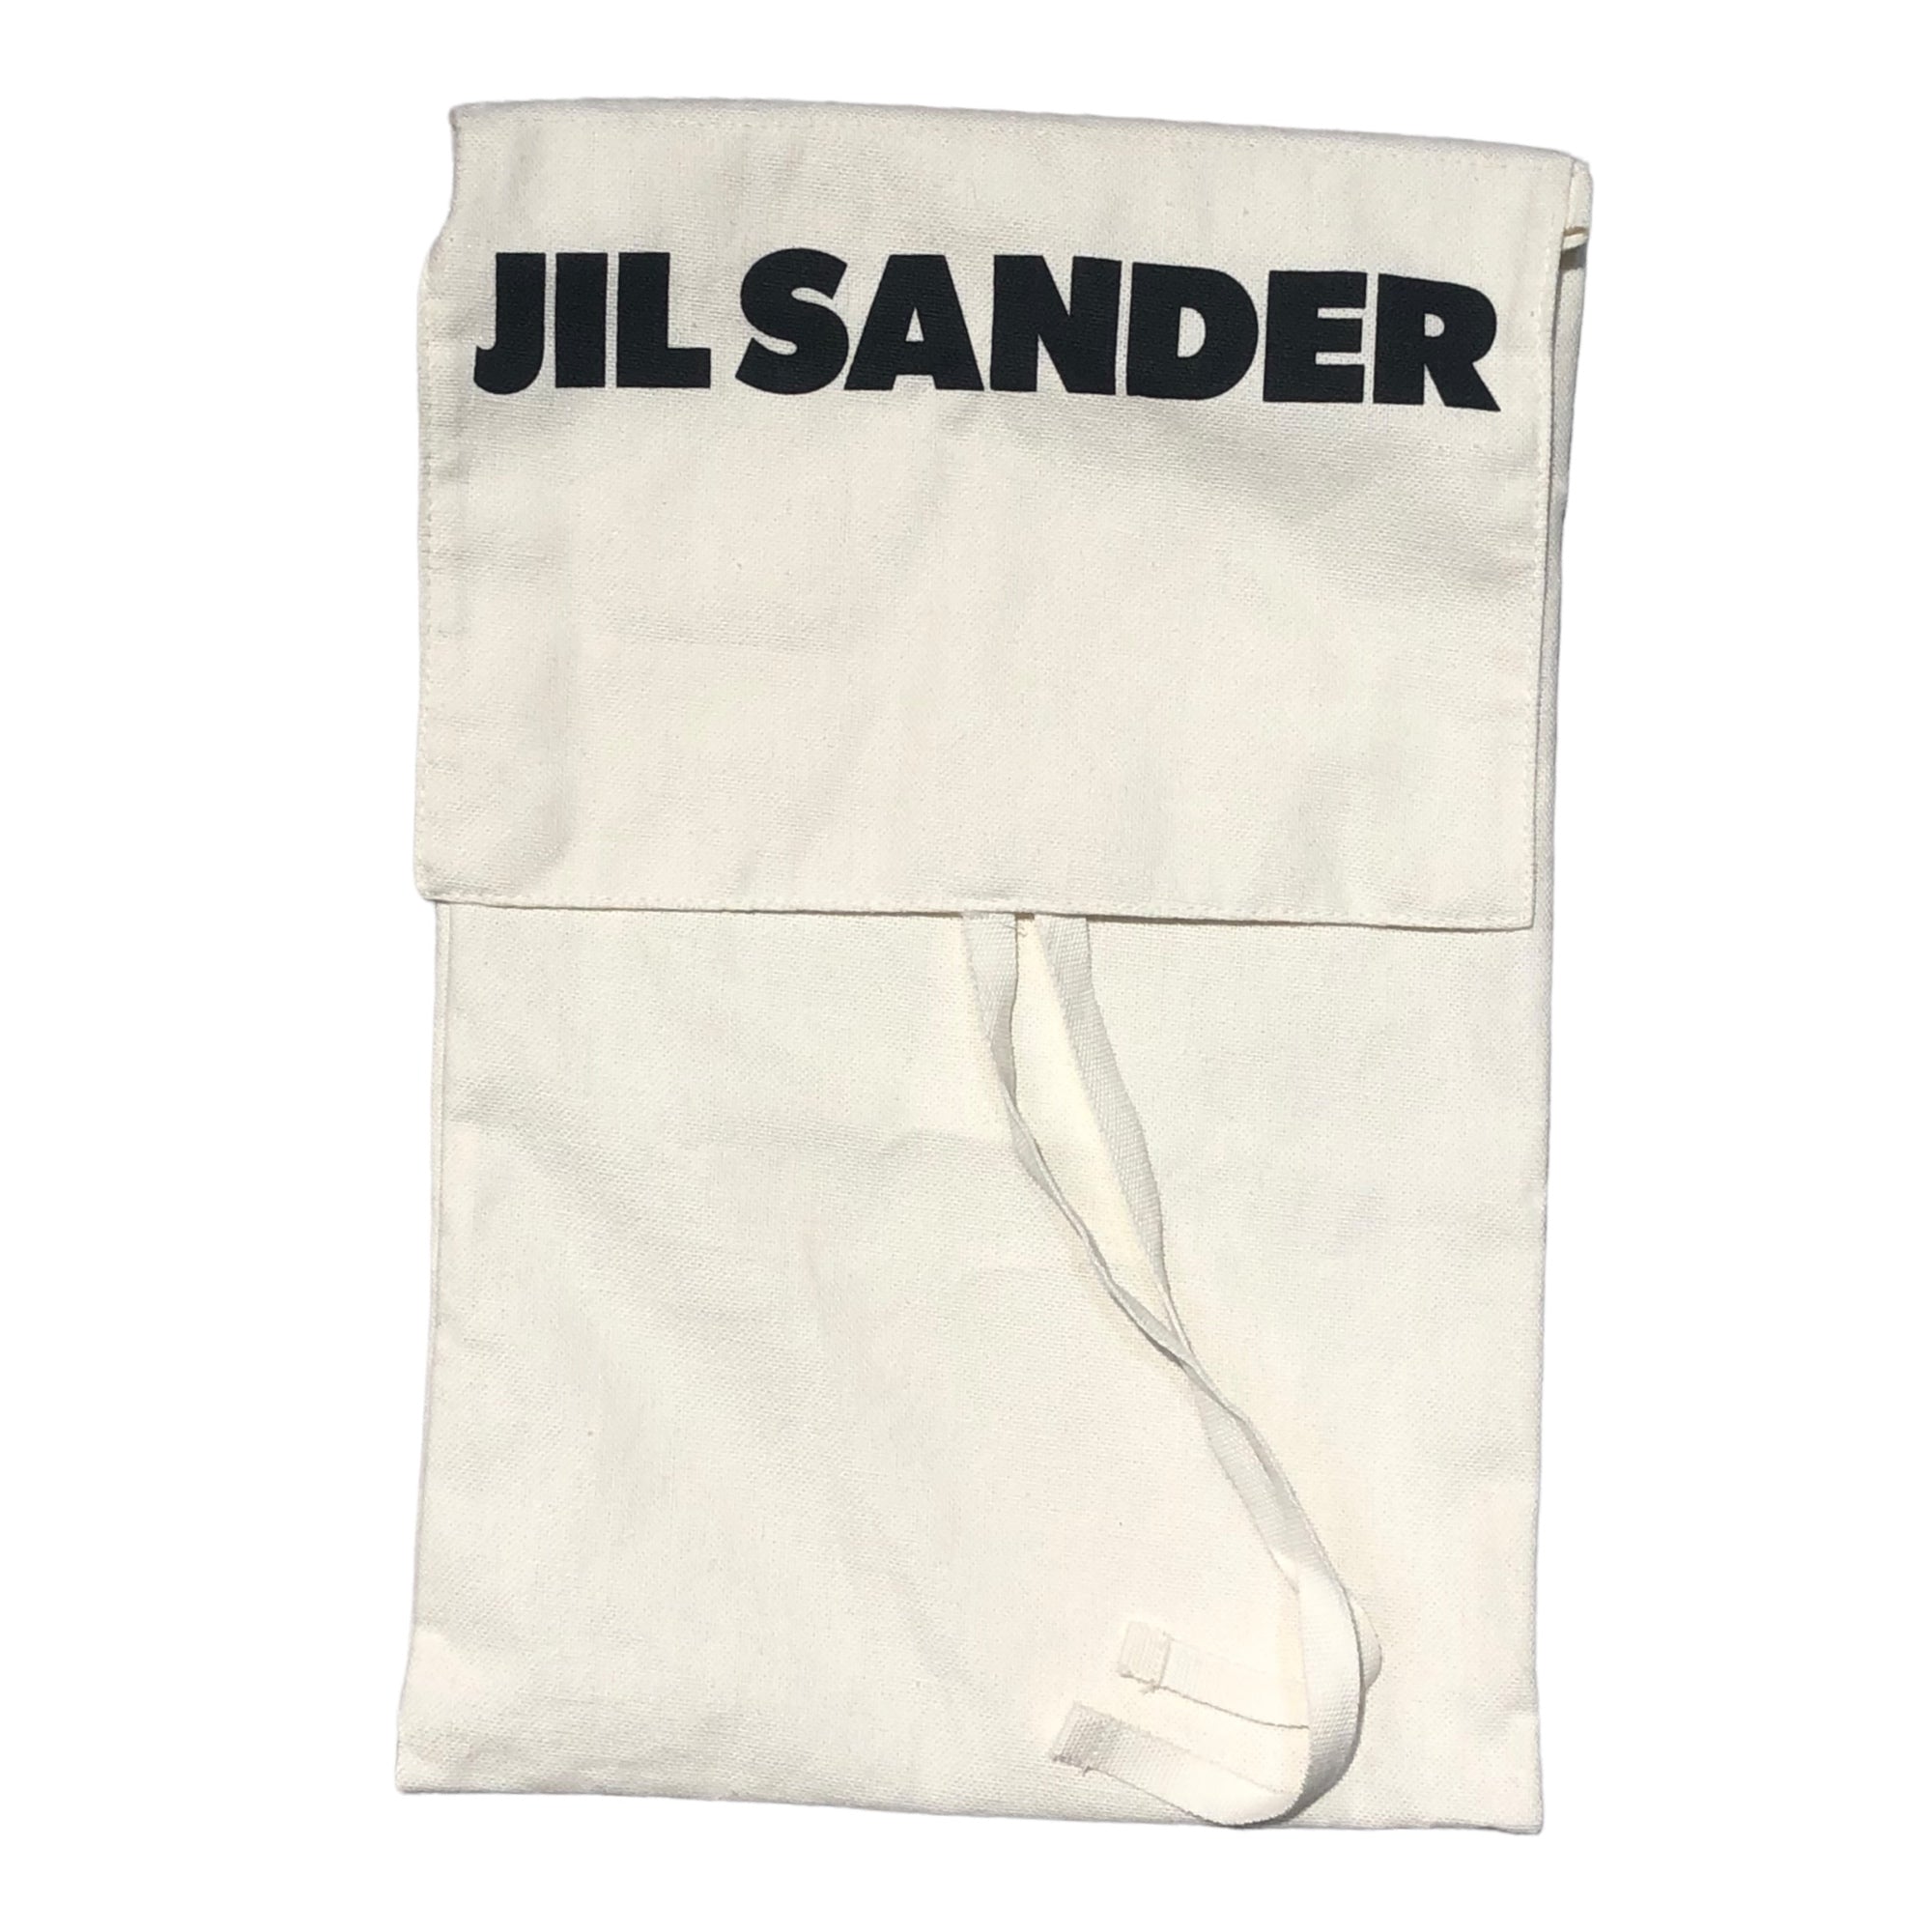 JIL SANDER(ジルサンダー) Tangle SMALL タングル スモール スカイブルー ショルダーバッグ